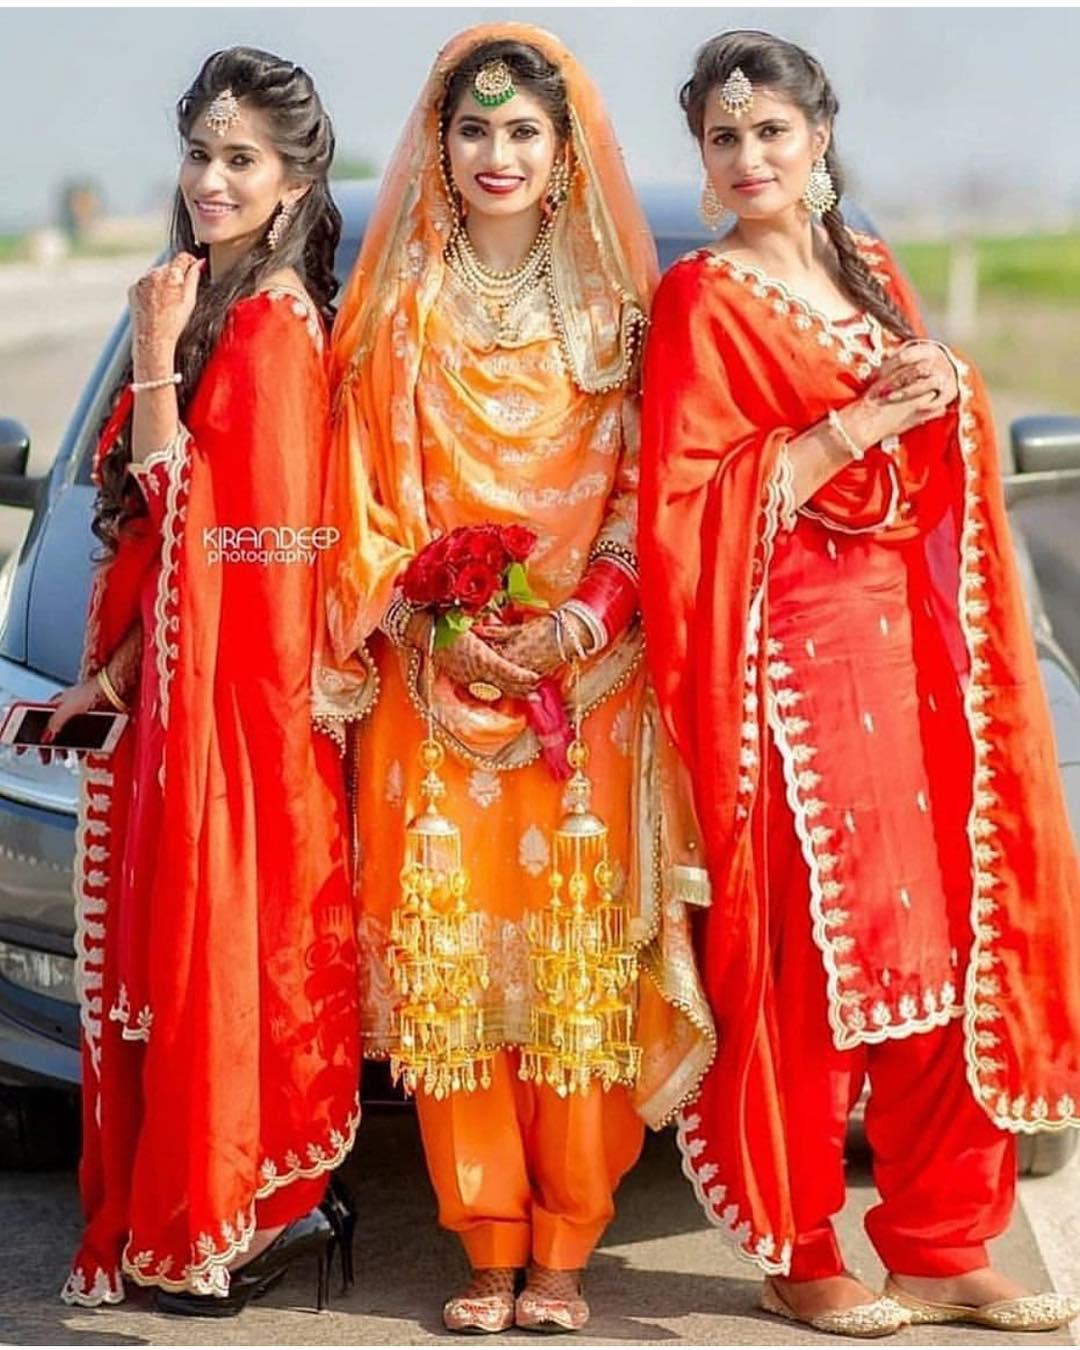 Punjabi Dress Images For The Ultimate Wedding Wardrobe